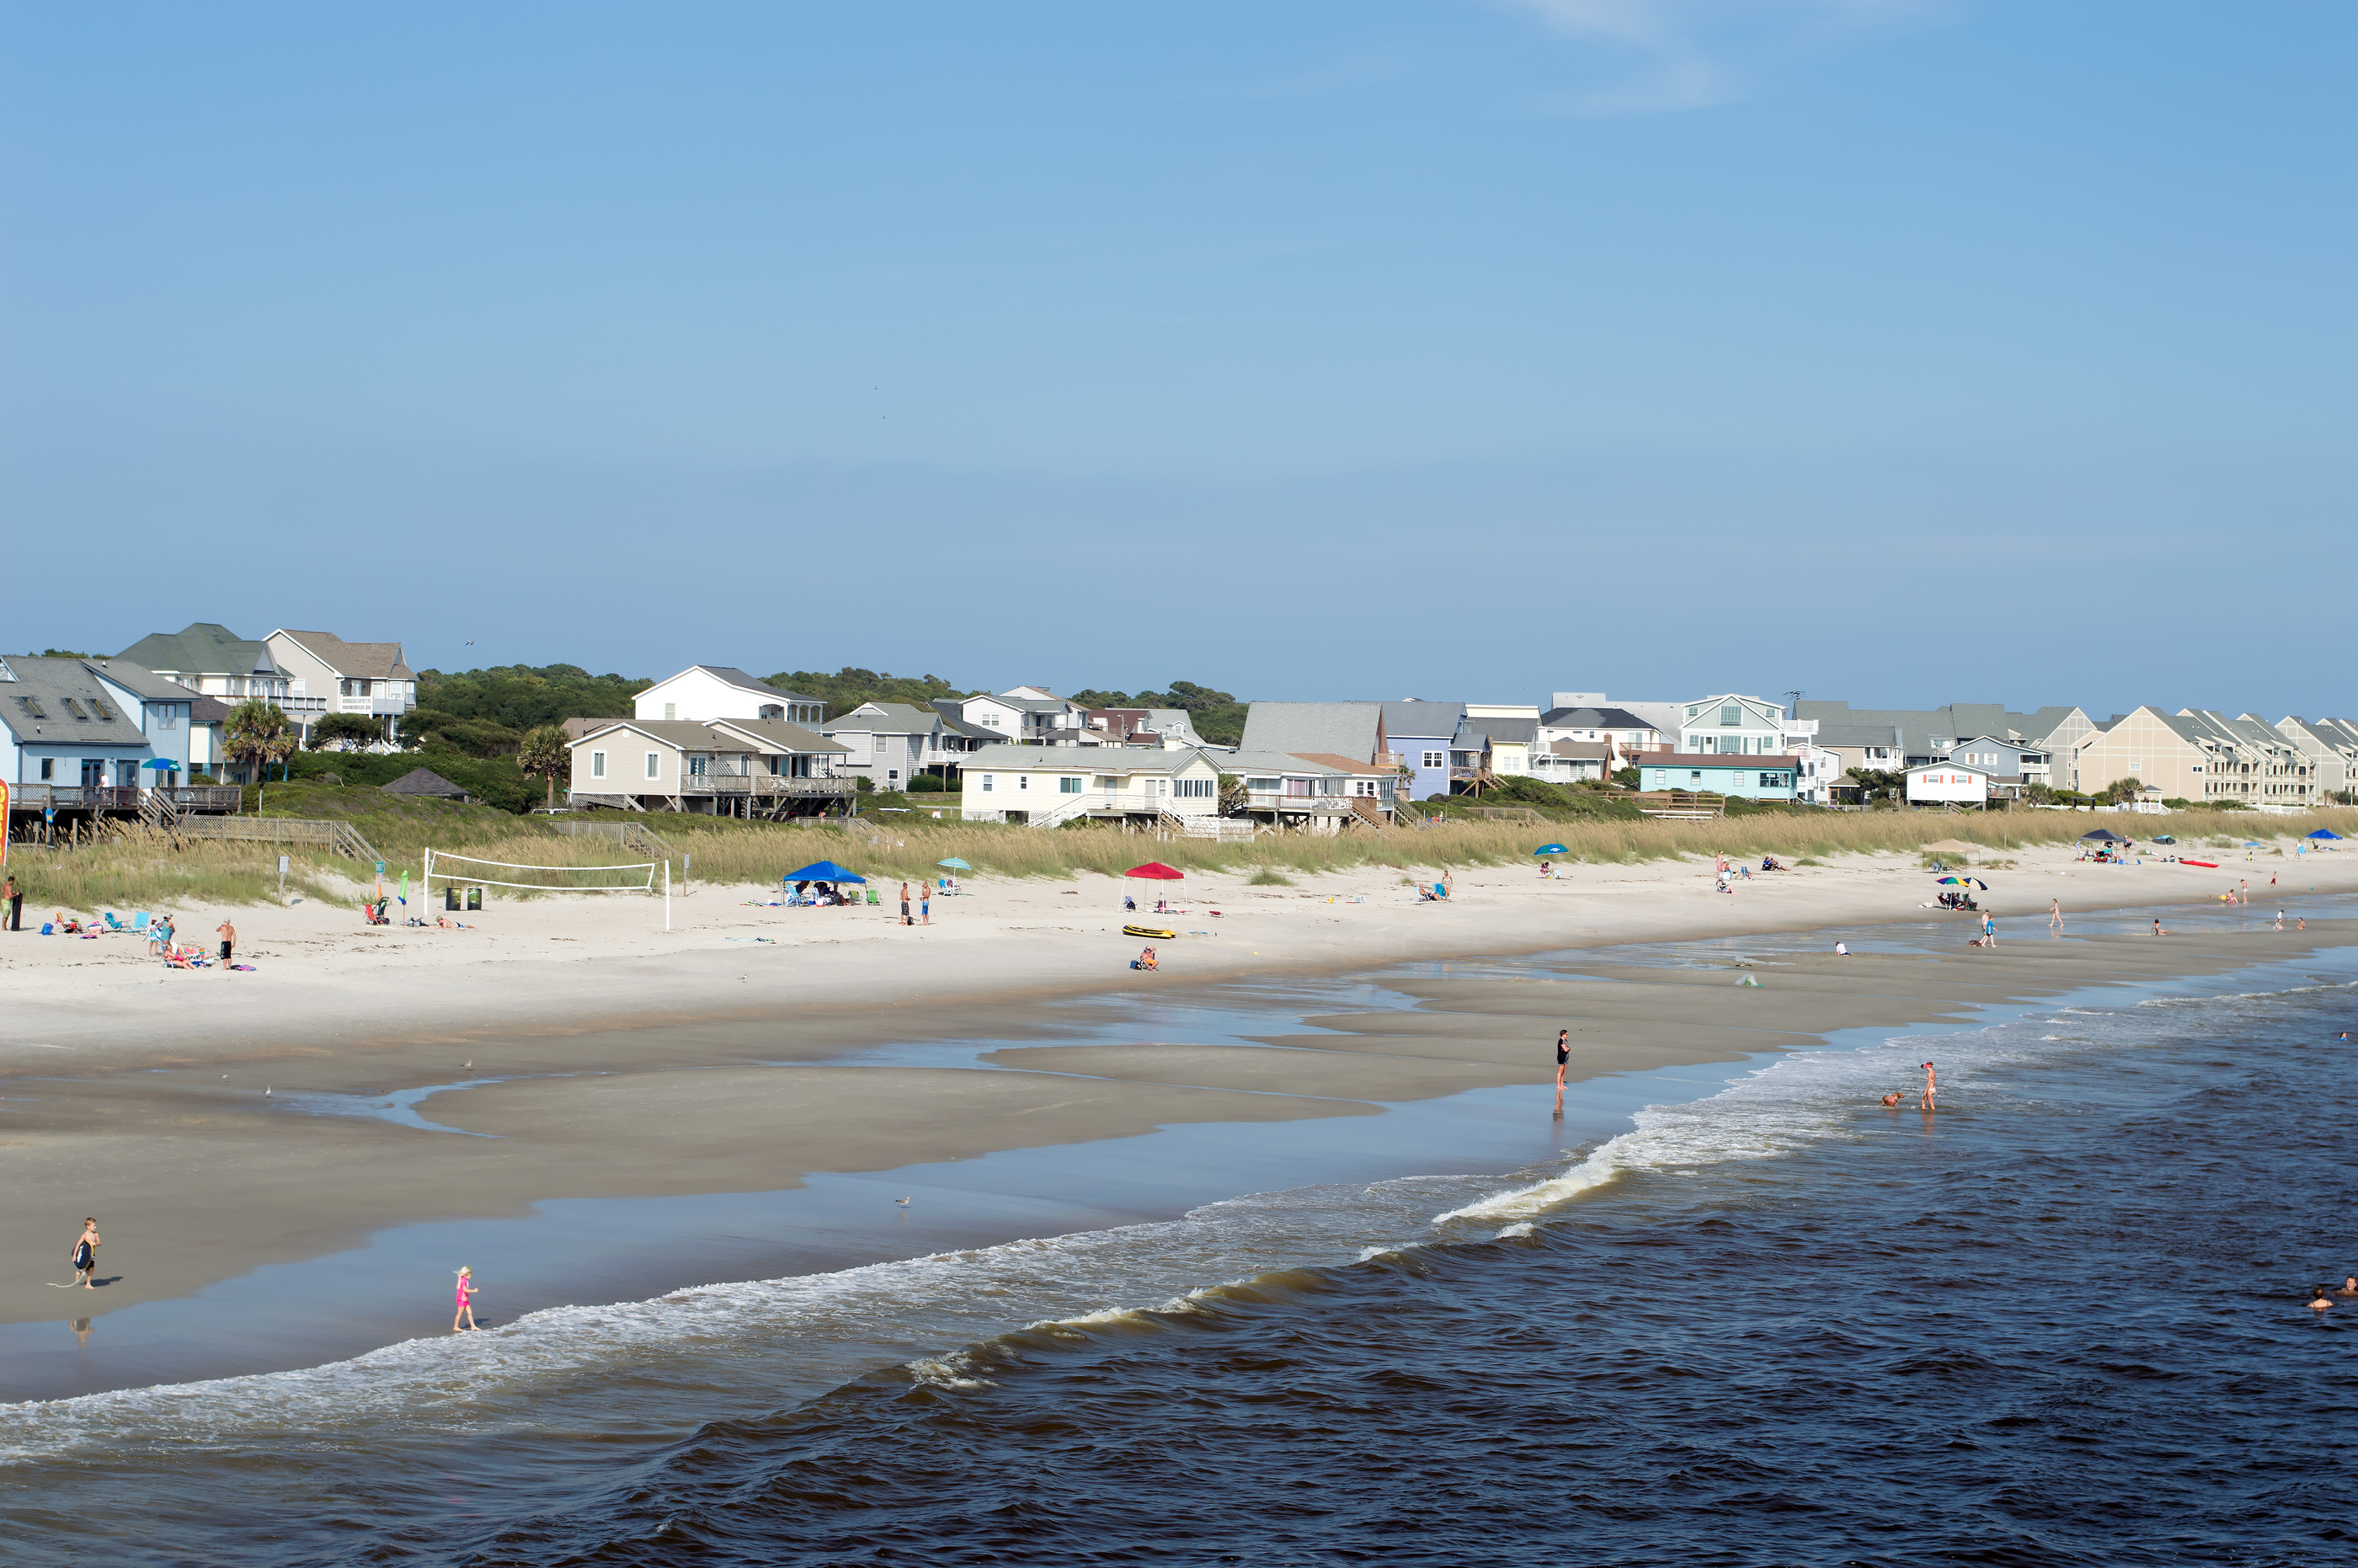 Yaupon Beach,NC USA - Aug. 15: Yaupon Beach: The Yaupon Beach Strand photographed on August 15, 2014.